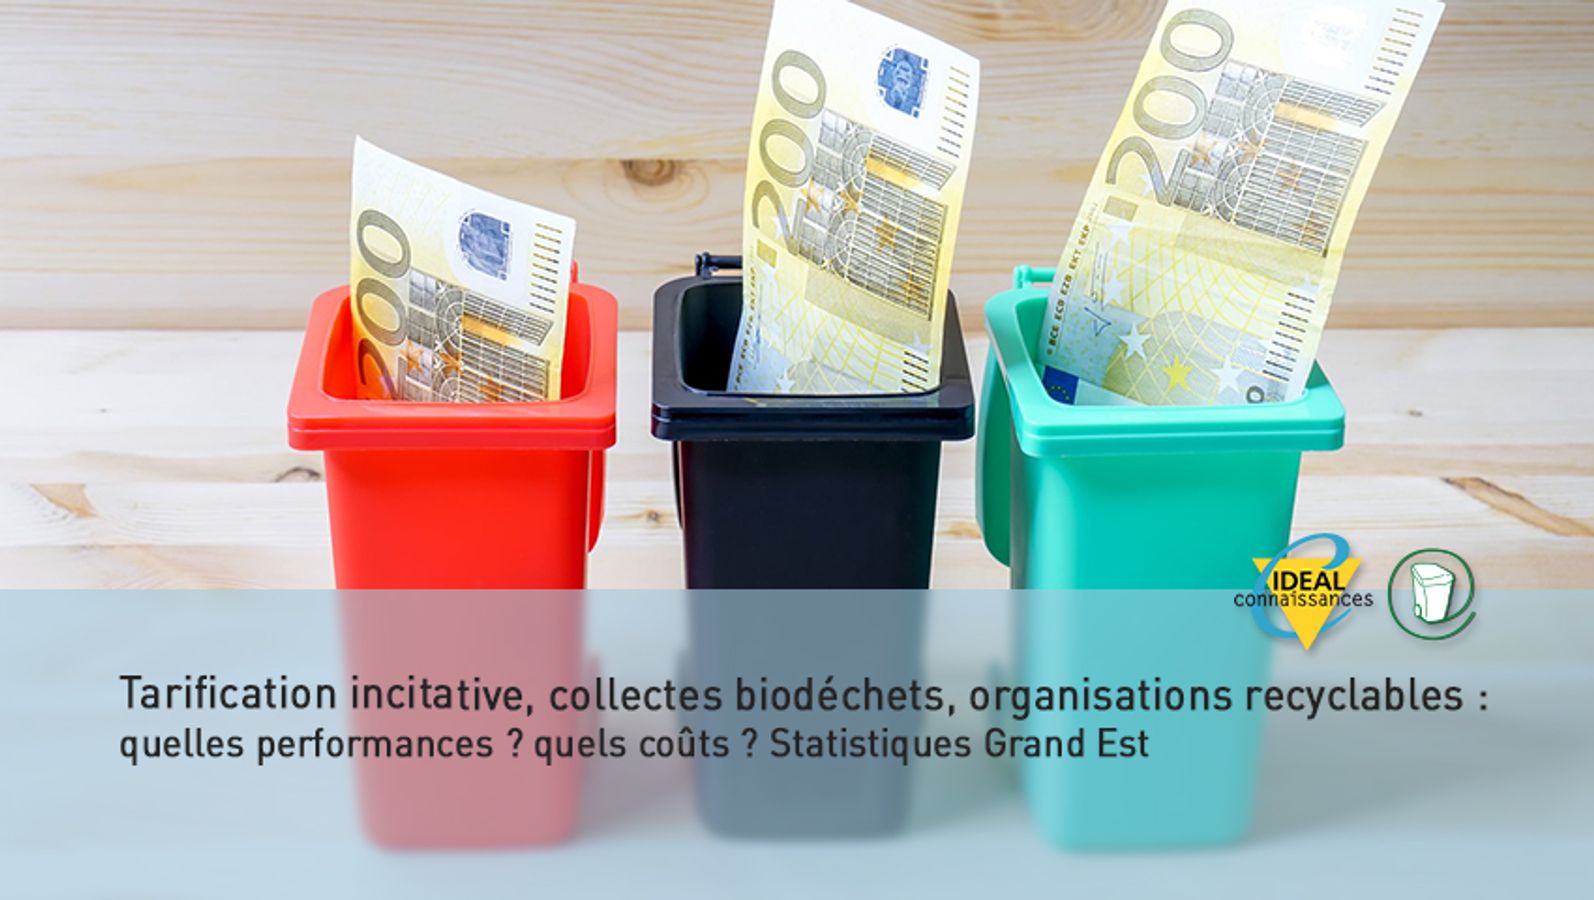 Tarification incitative, collectes biodéchets, organisations recyclables : quelles performances? quels coûts? Statistiques Grand Est